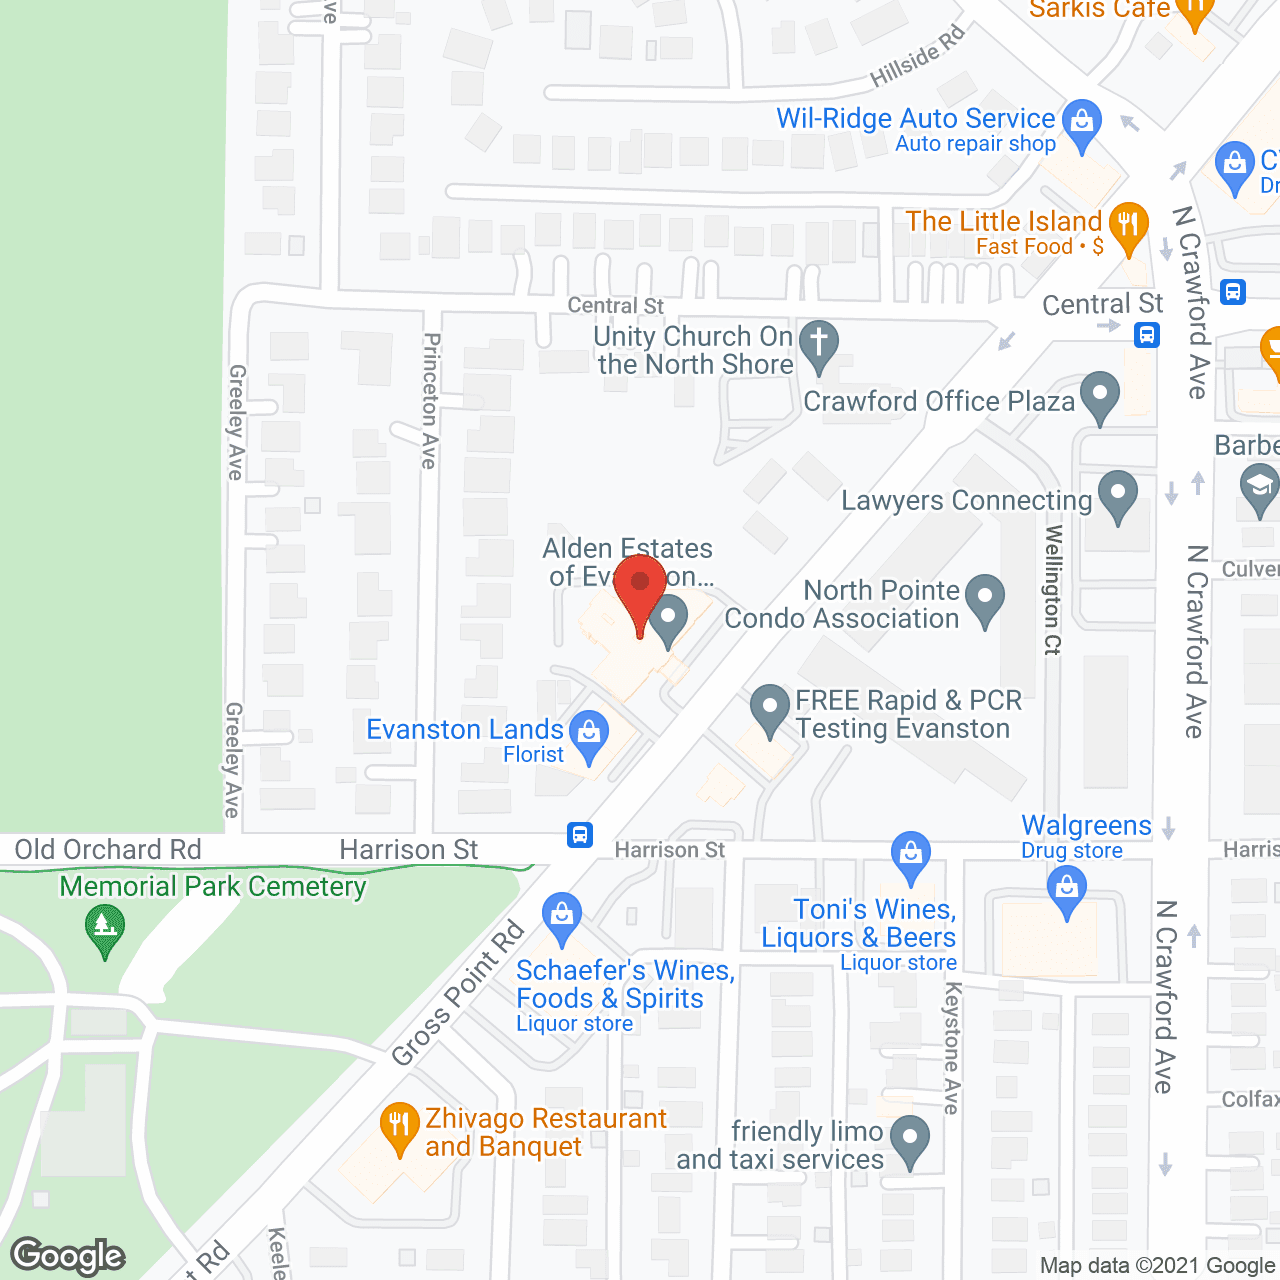 Alden Estates of Evanston in google map